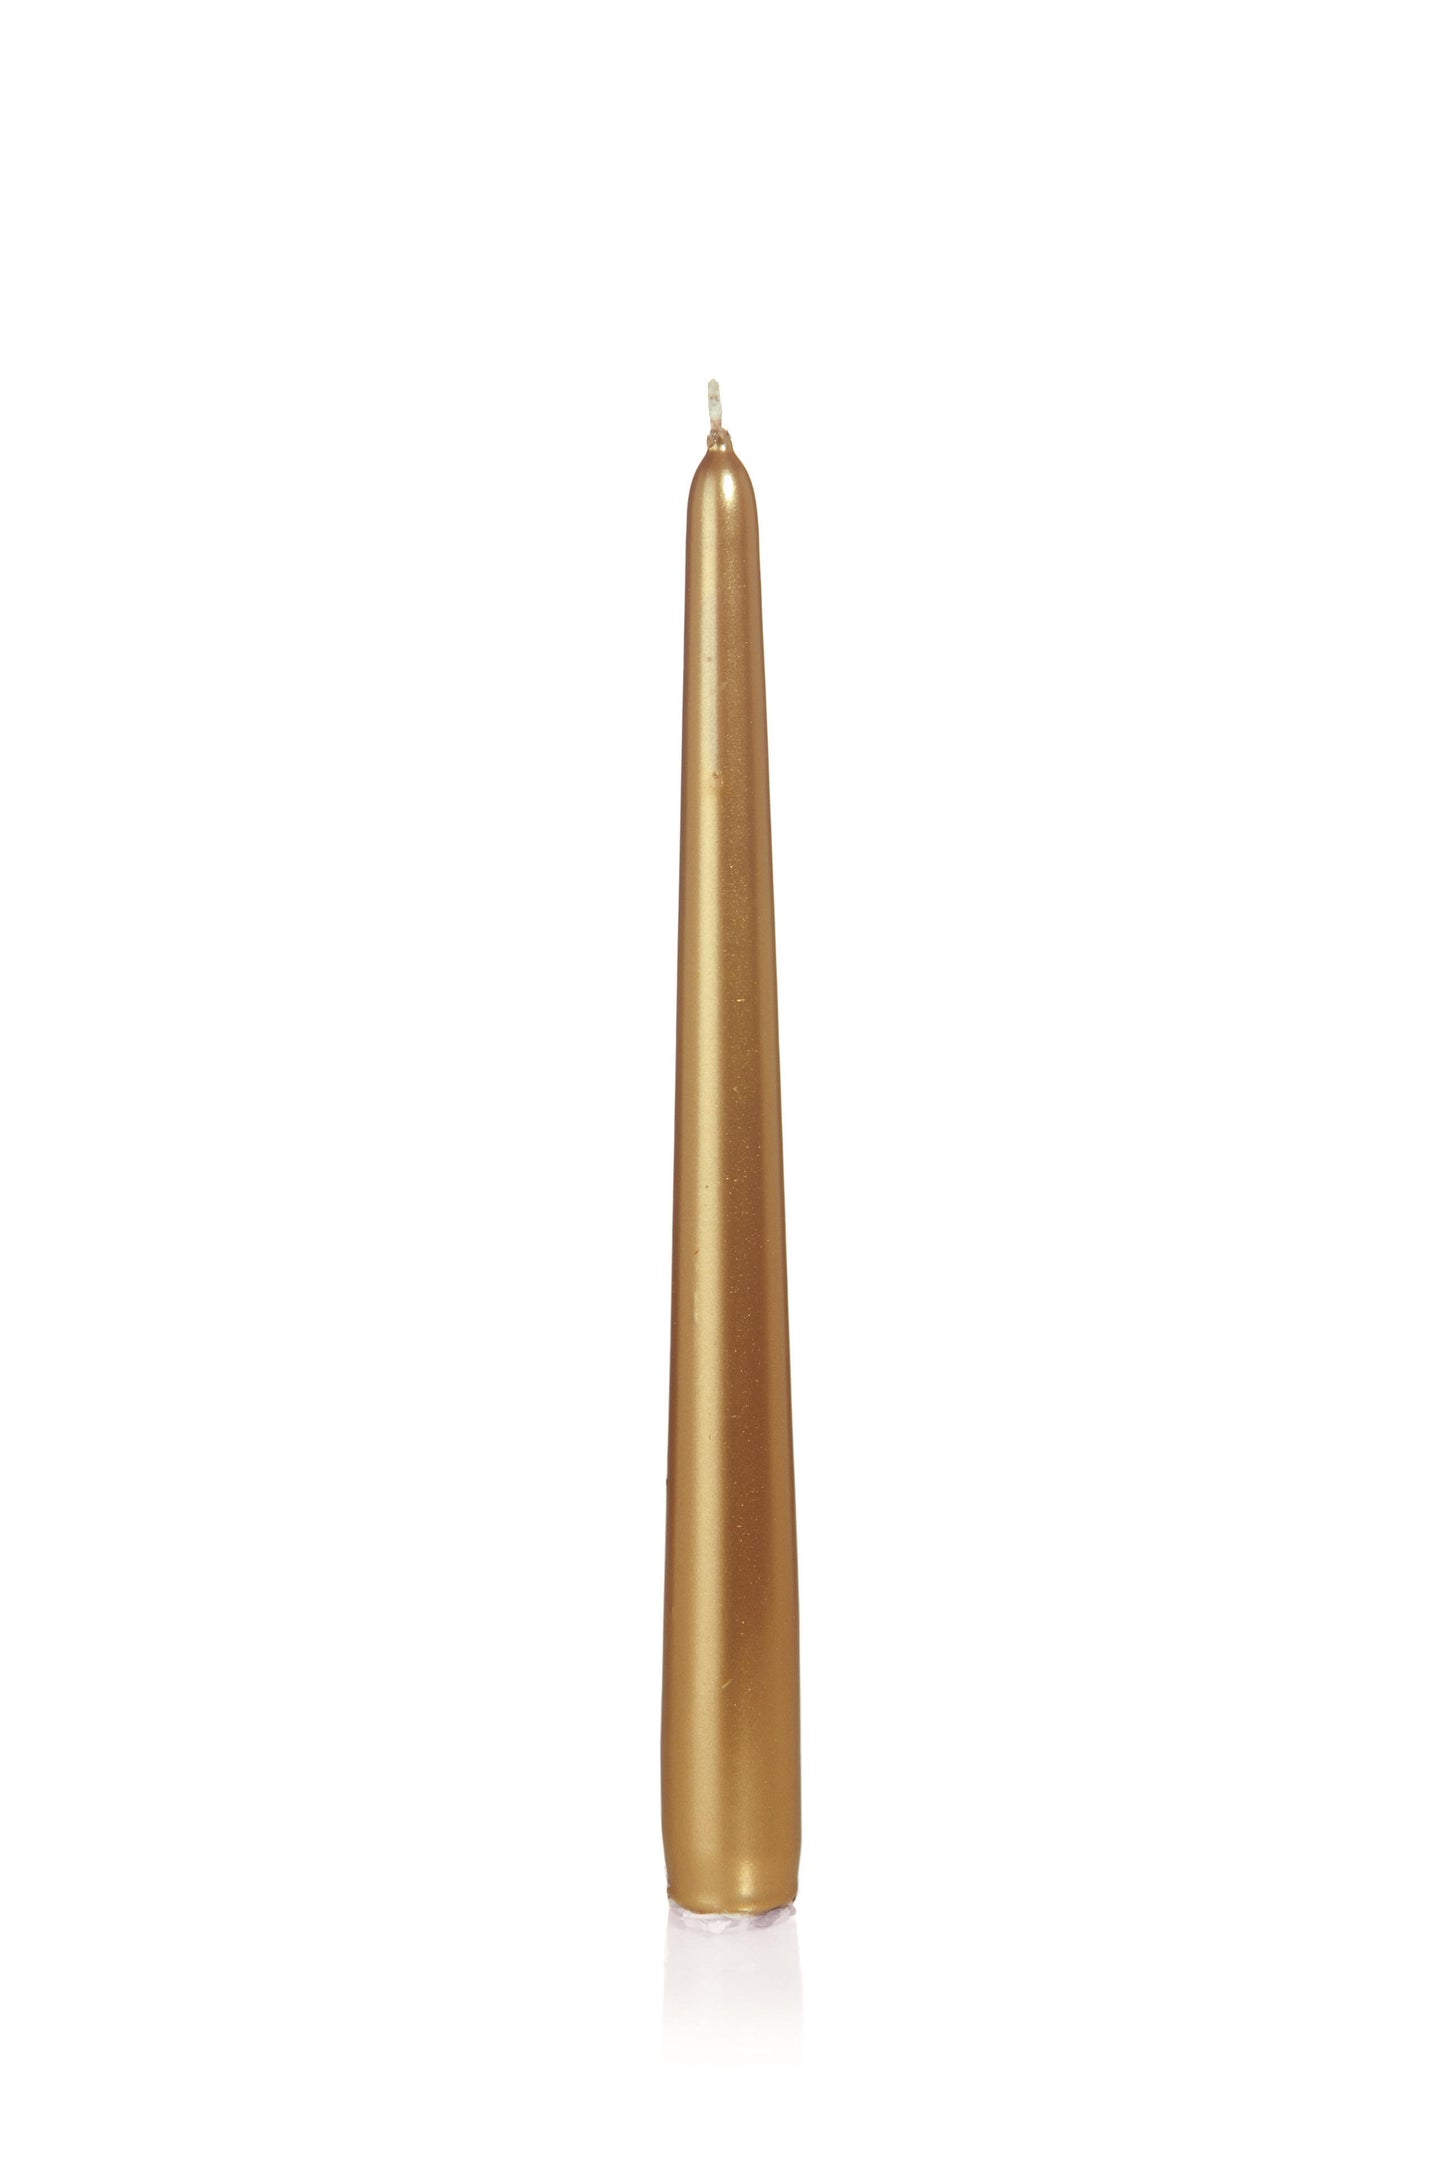 12x Konische Kerzen lackiert in Cellophan 250/25mm (Gold)